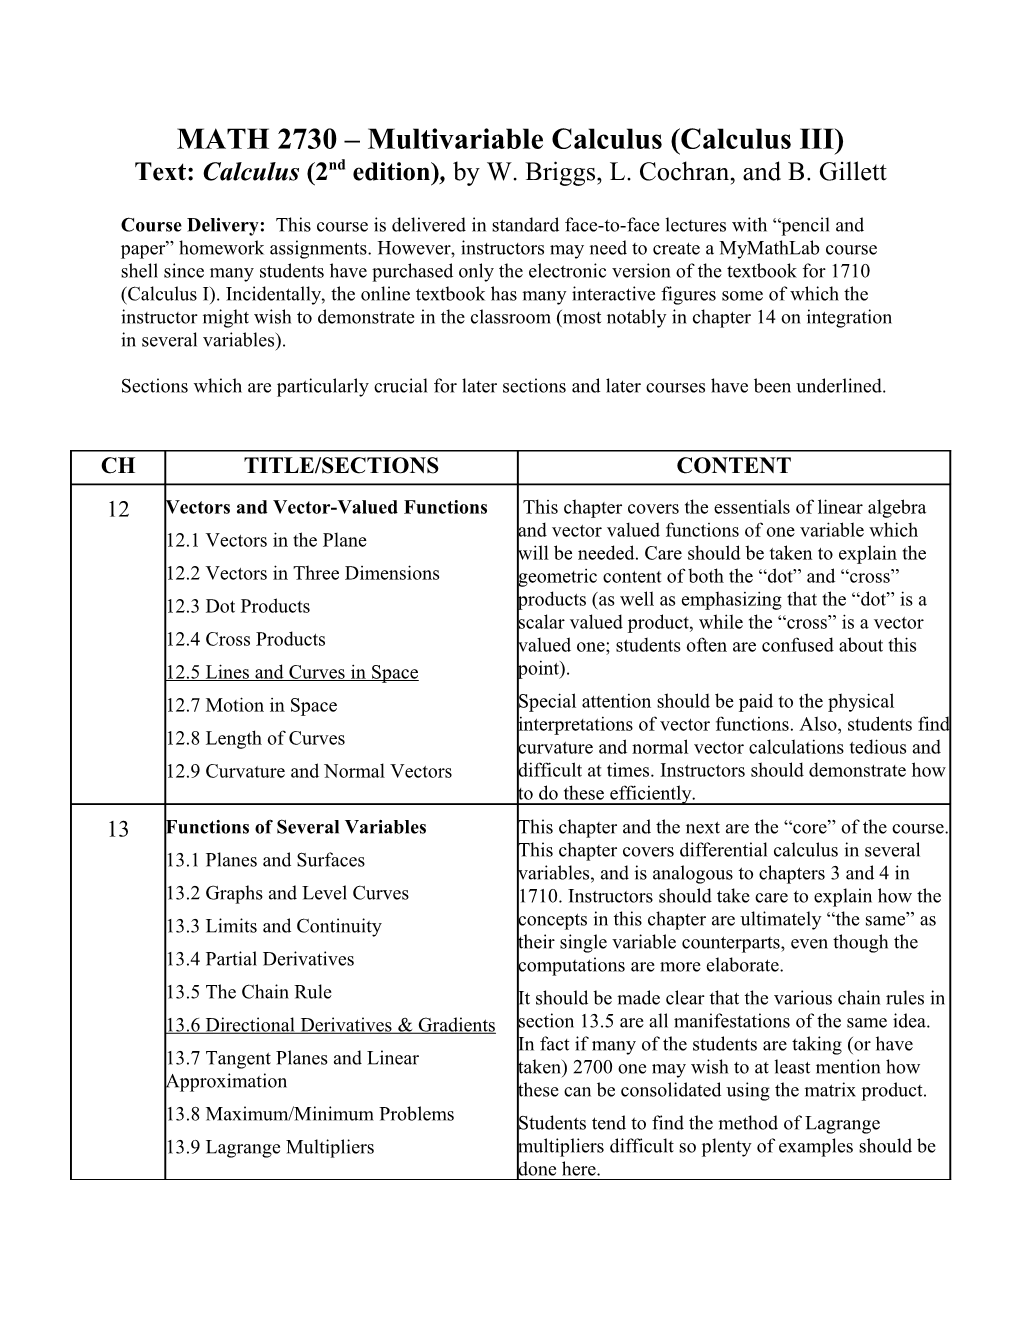 MATH2730 Multivariable Calculus (Calculus III)